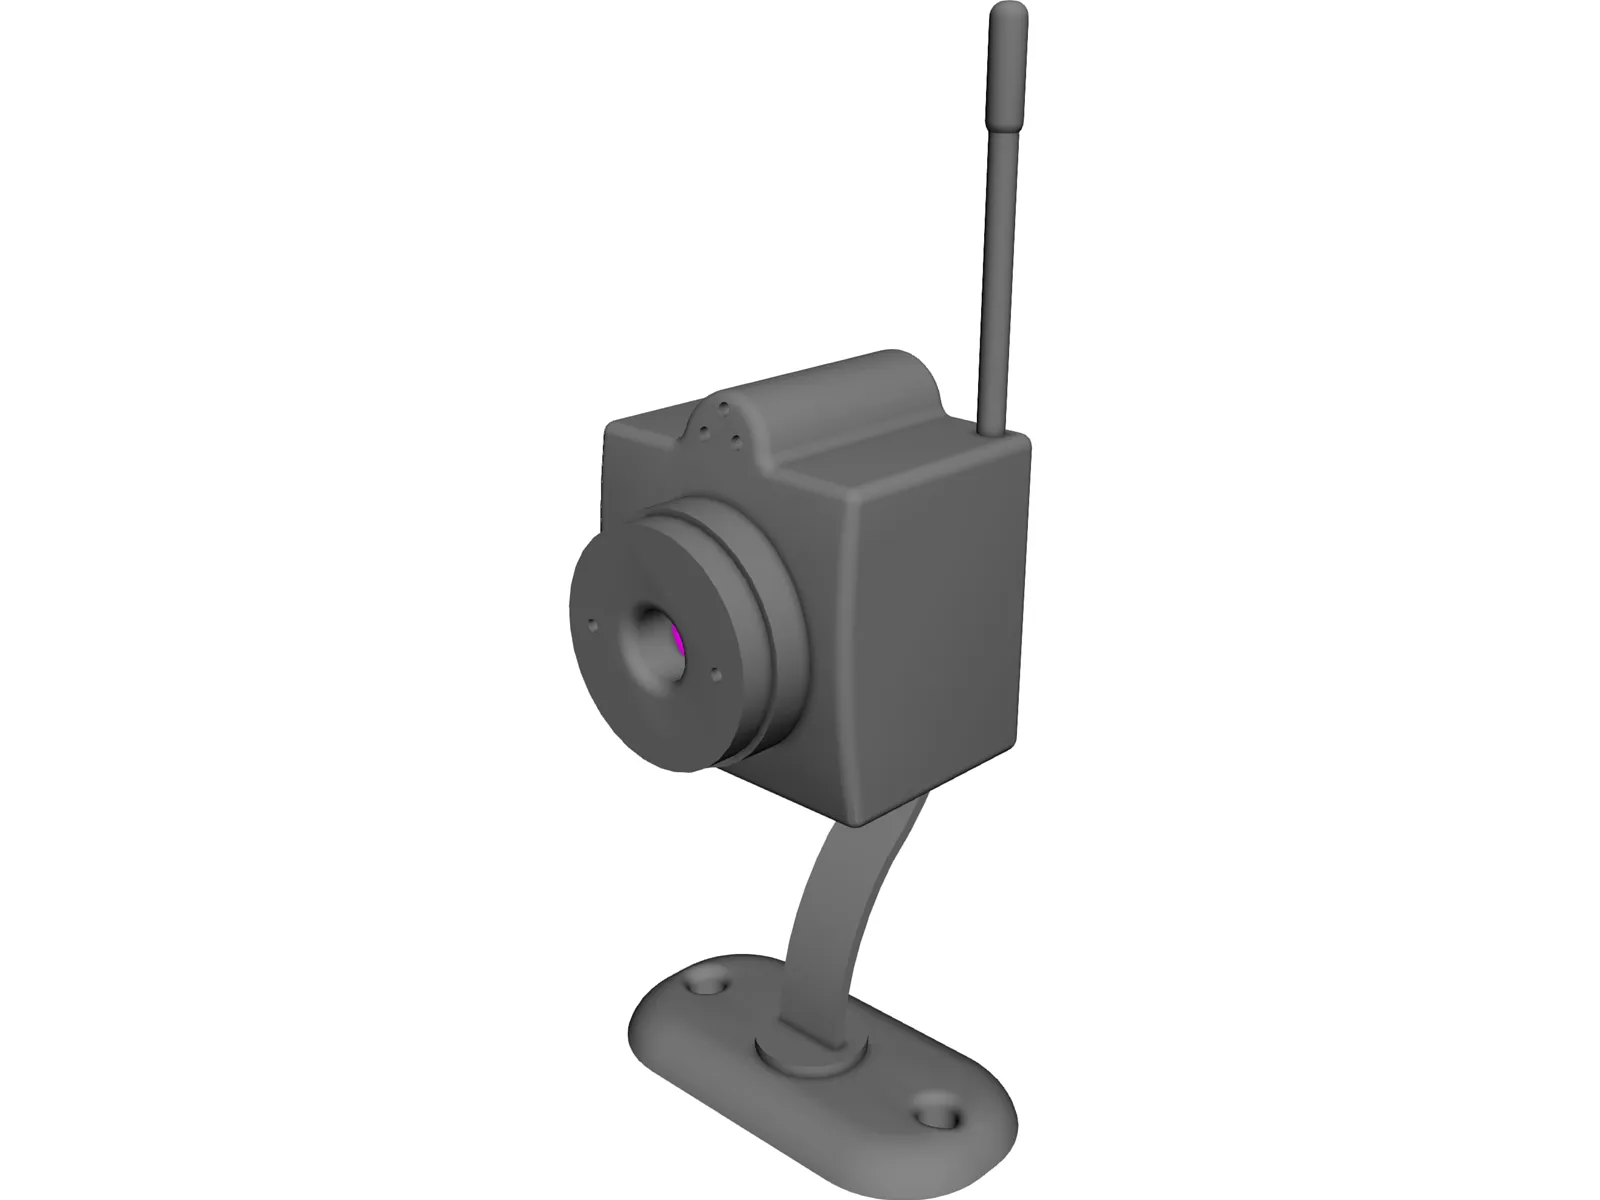 Micro Camera 3D Model